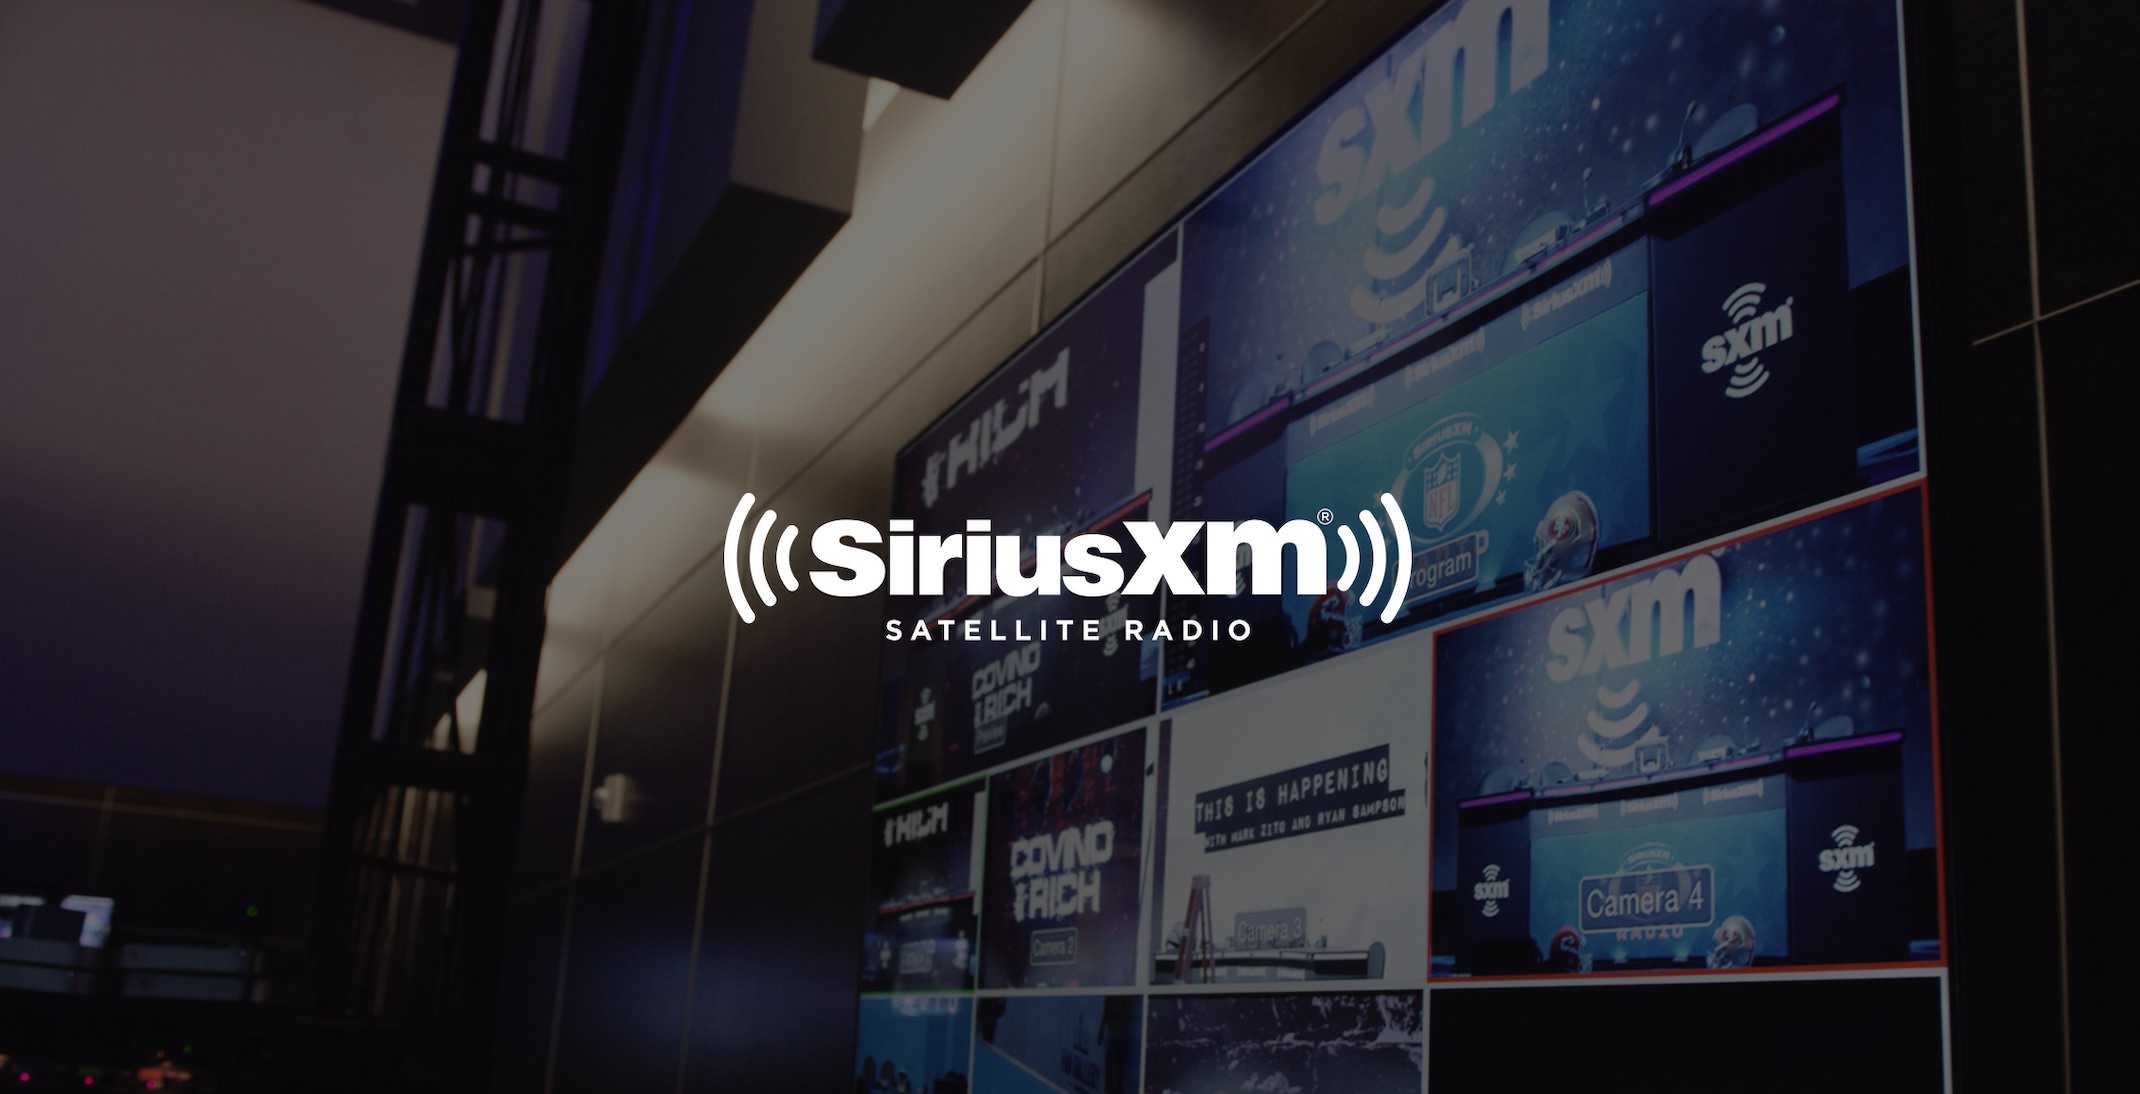 White Sirius XM Satellite Radio logo with dimmed background of video bank